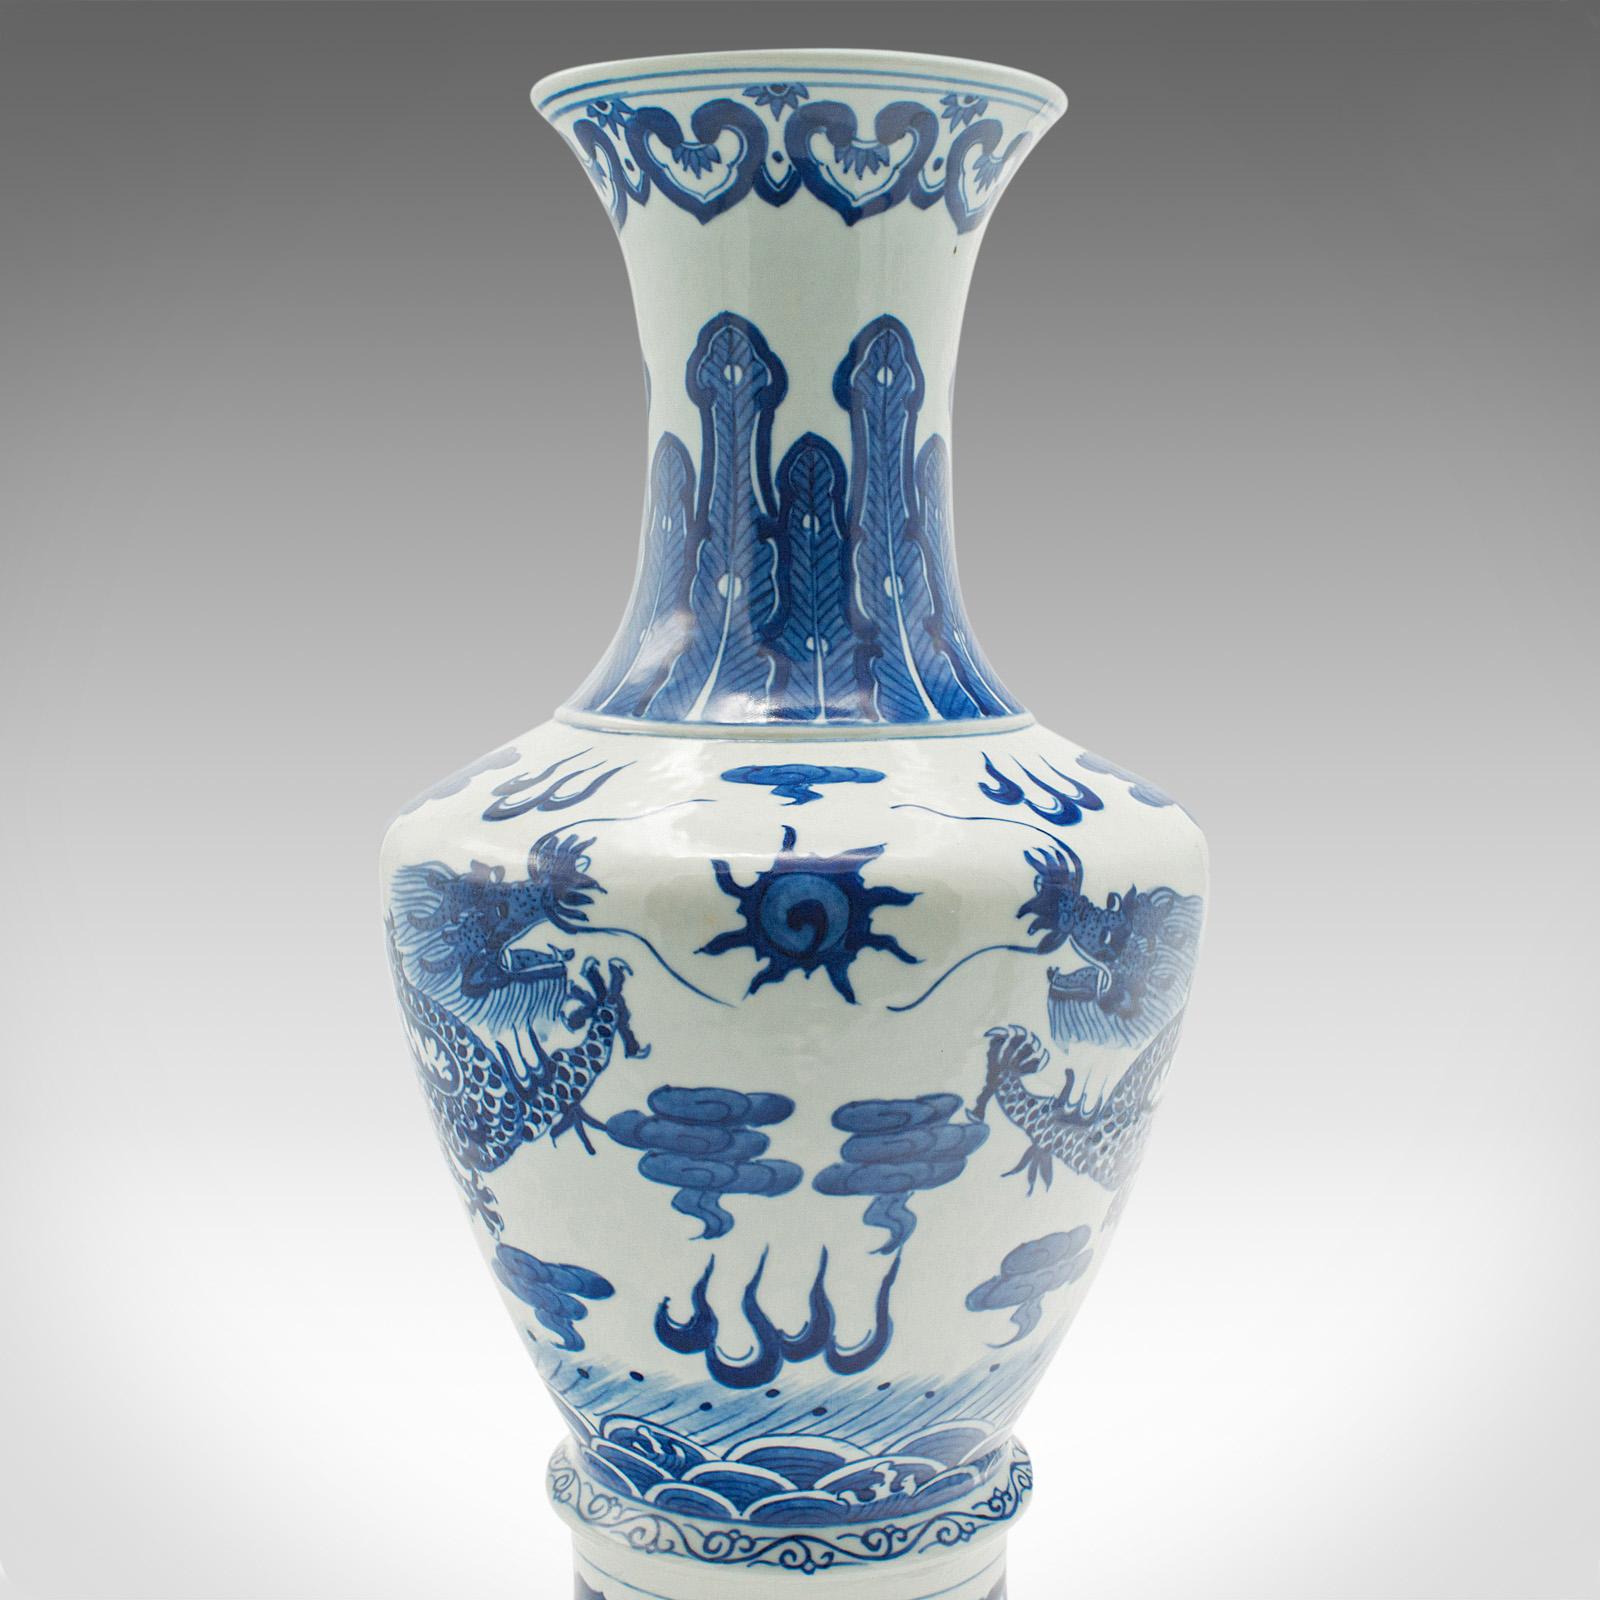 Large Vintage White and Blue Vase, Chinese, Ceramic, Decor, Flower Baluster For Sale 2